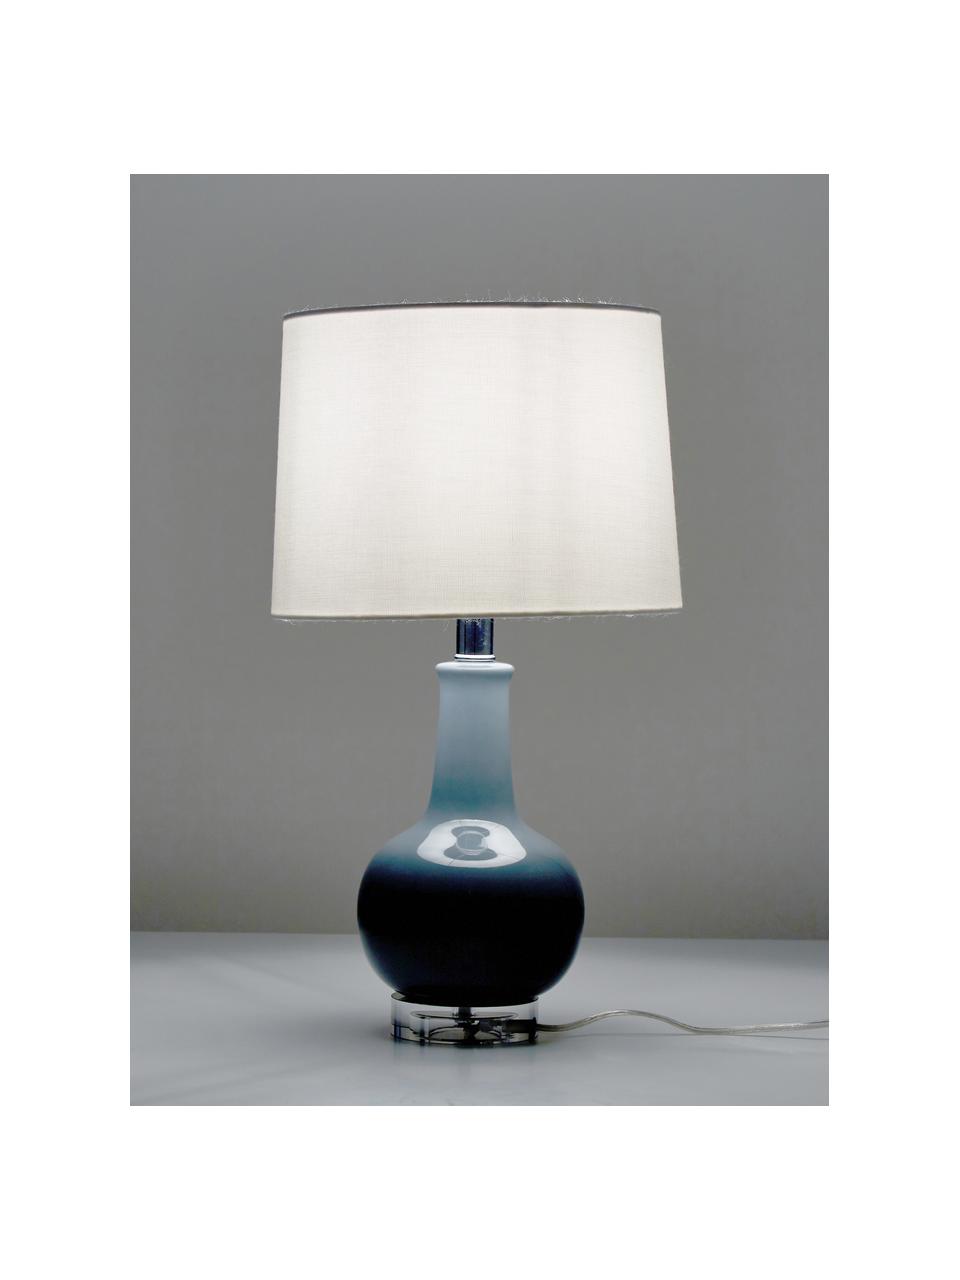 Keramická stolní lampa Brittany, Bílá, šedá, Ø 28 cm, V 48 cm